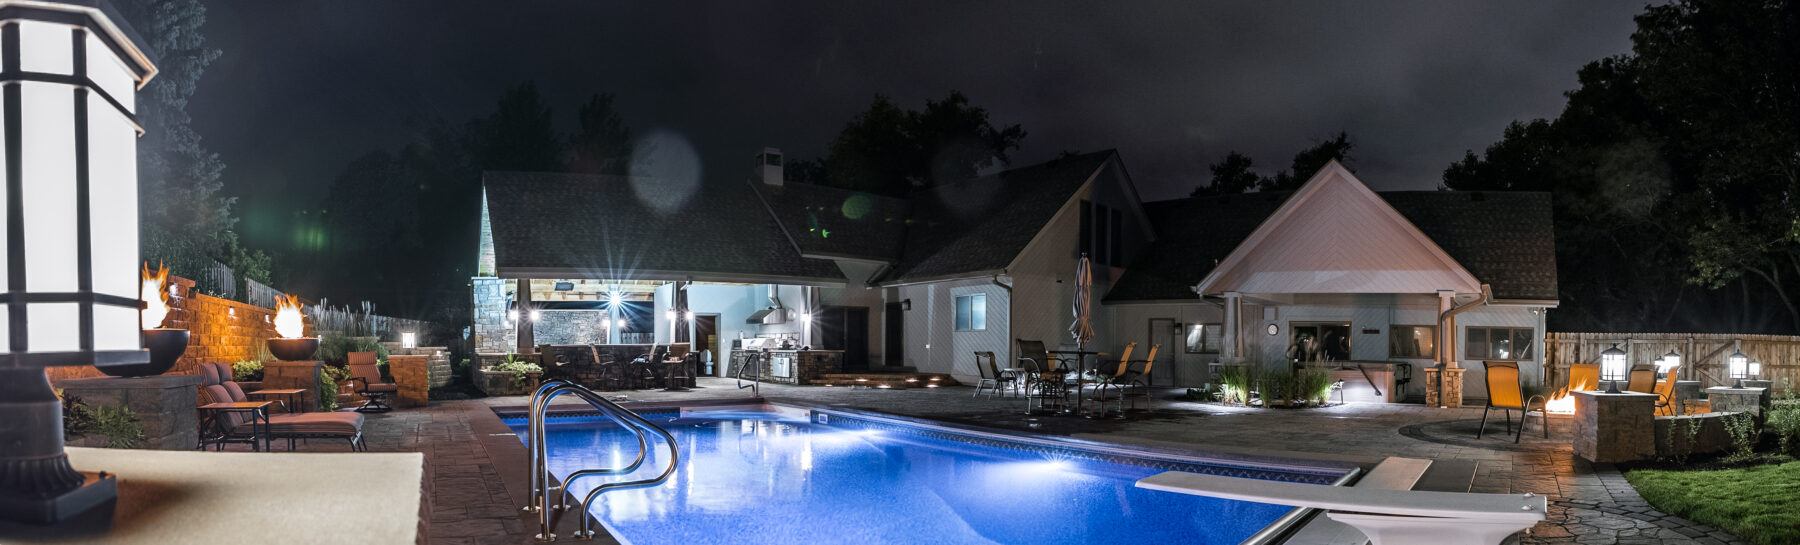 custom pool and paver patio at night